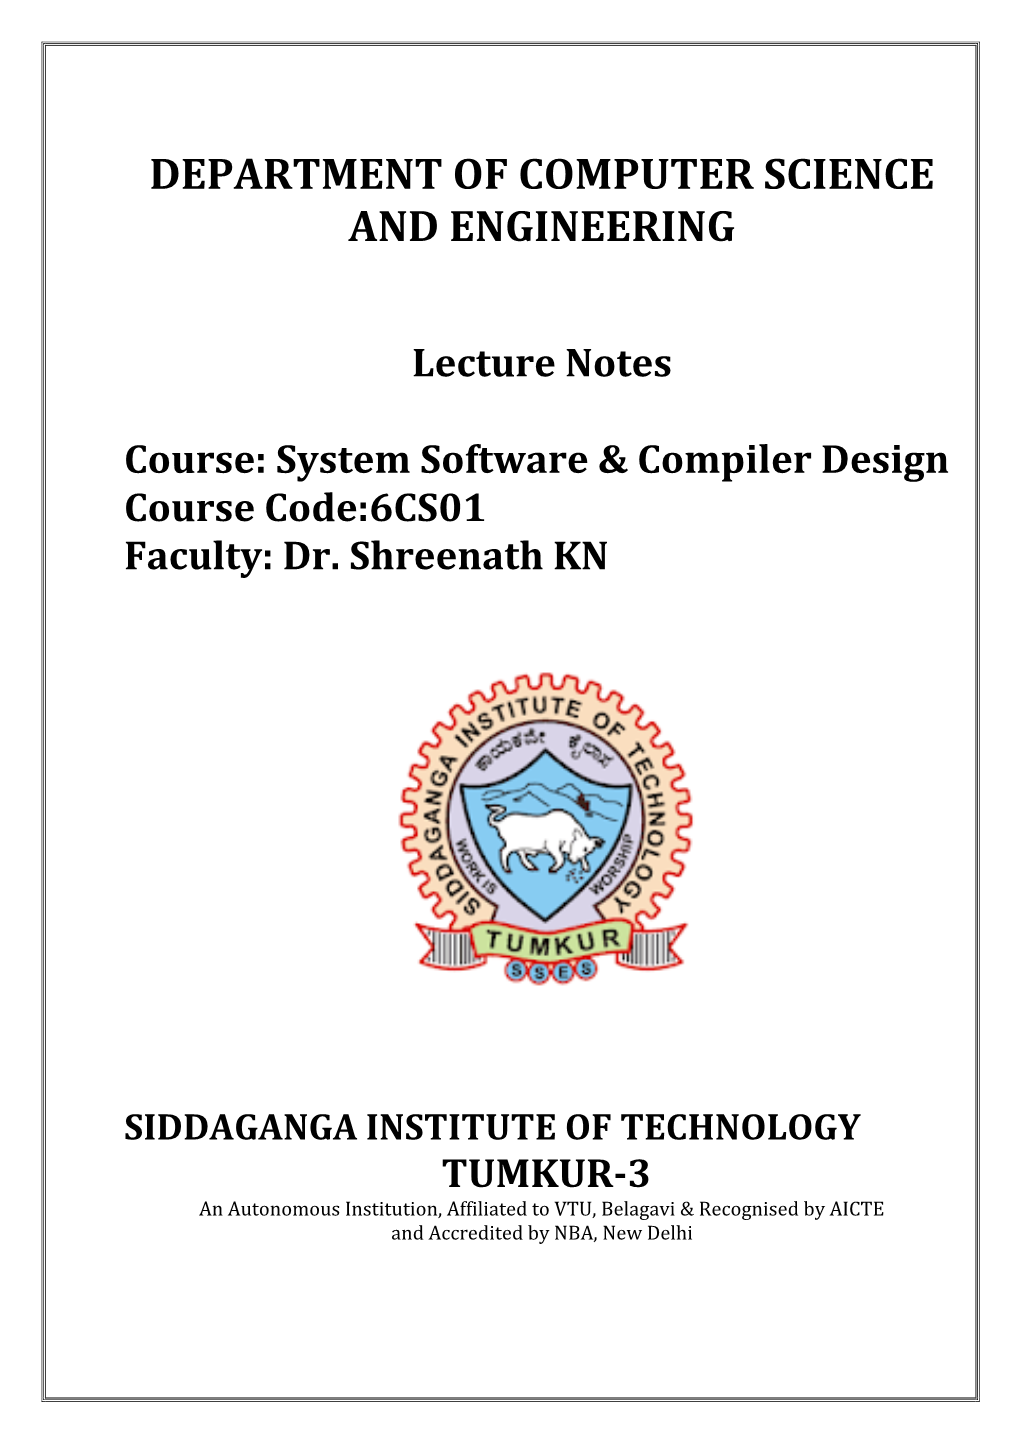 System Software and Compiler Design